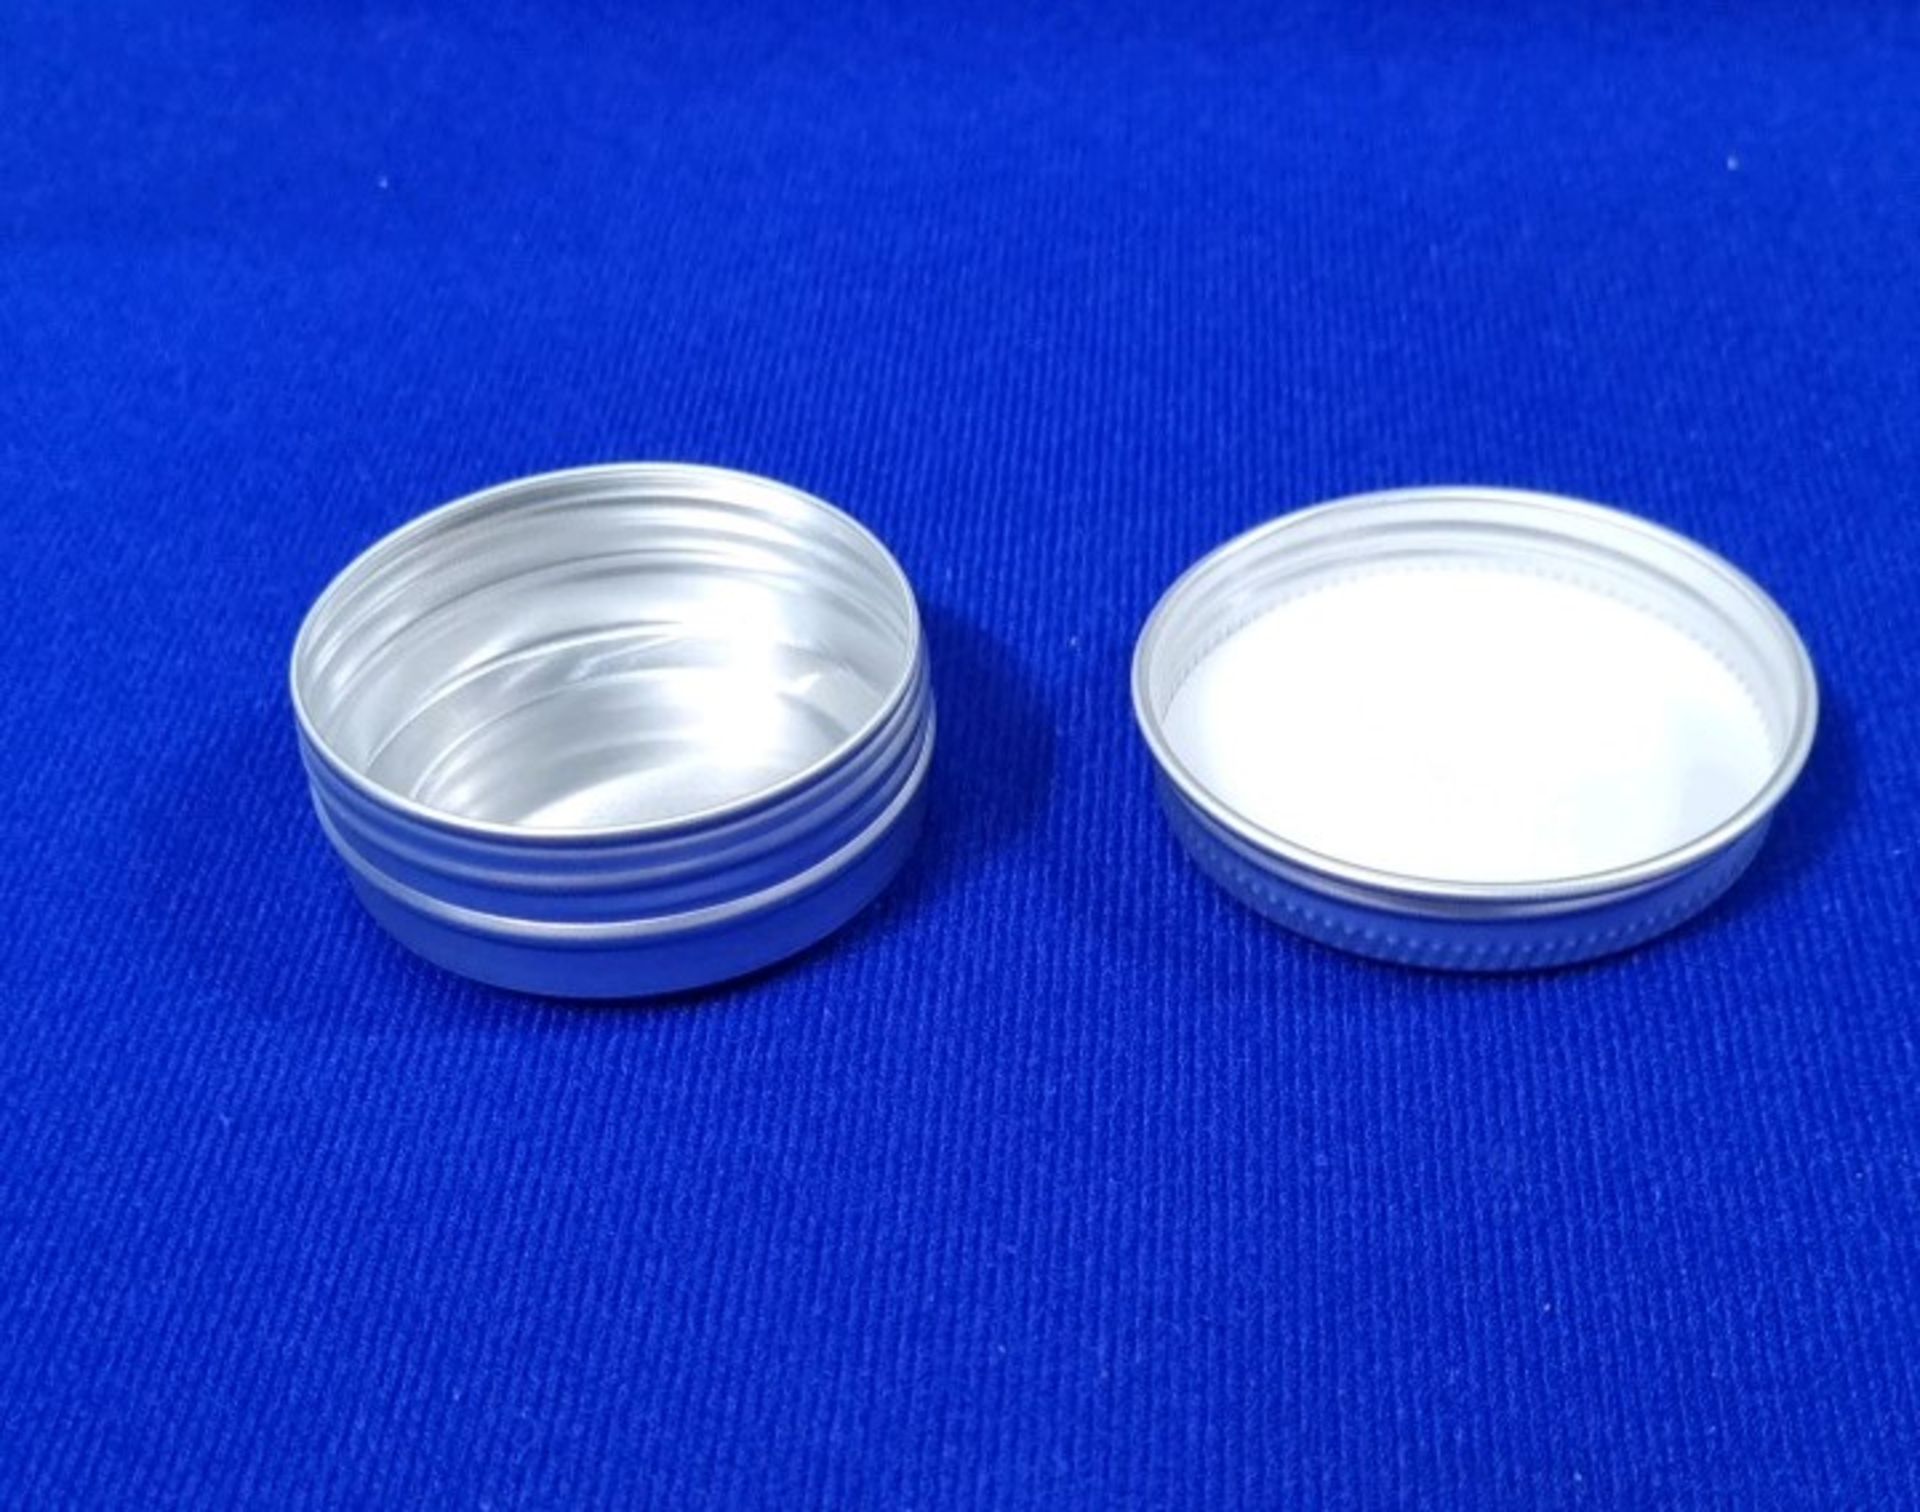 96 x 30 ML Round Aluminium Tins With Screw On Lids - Image 2 of 4